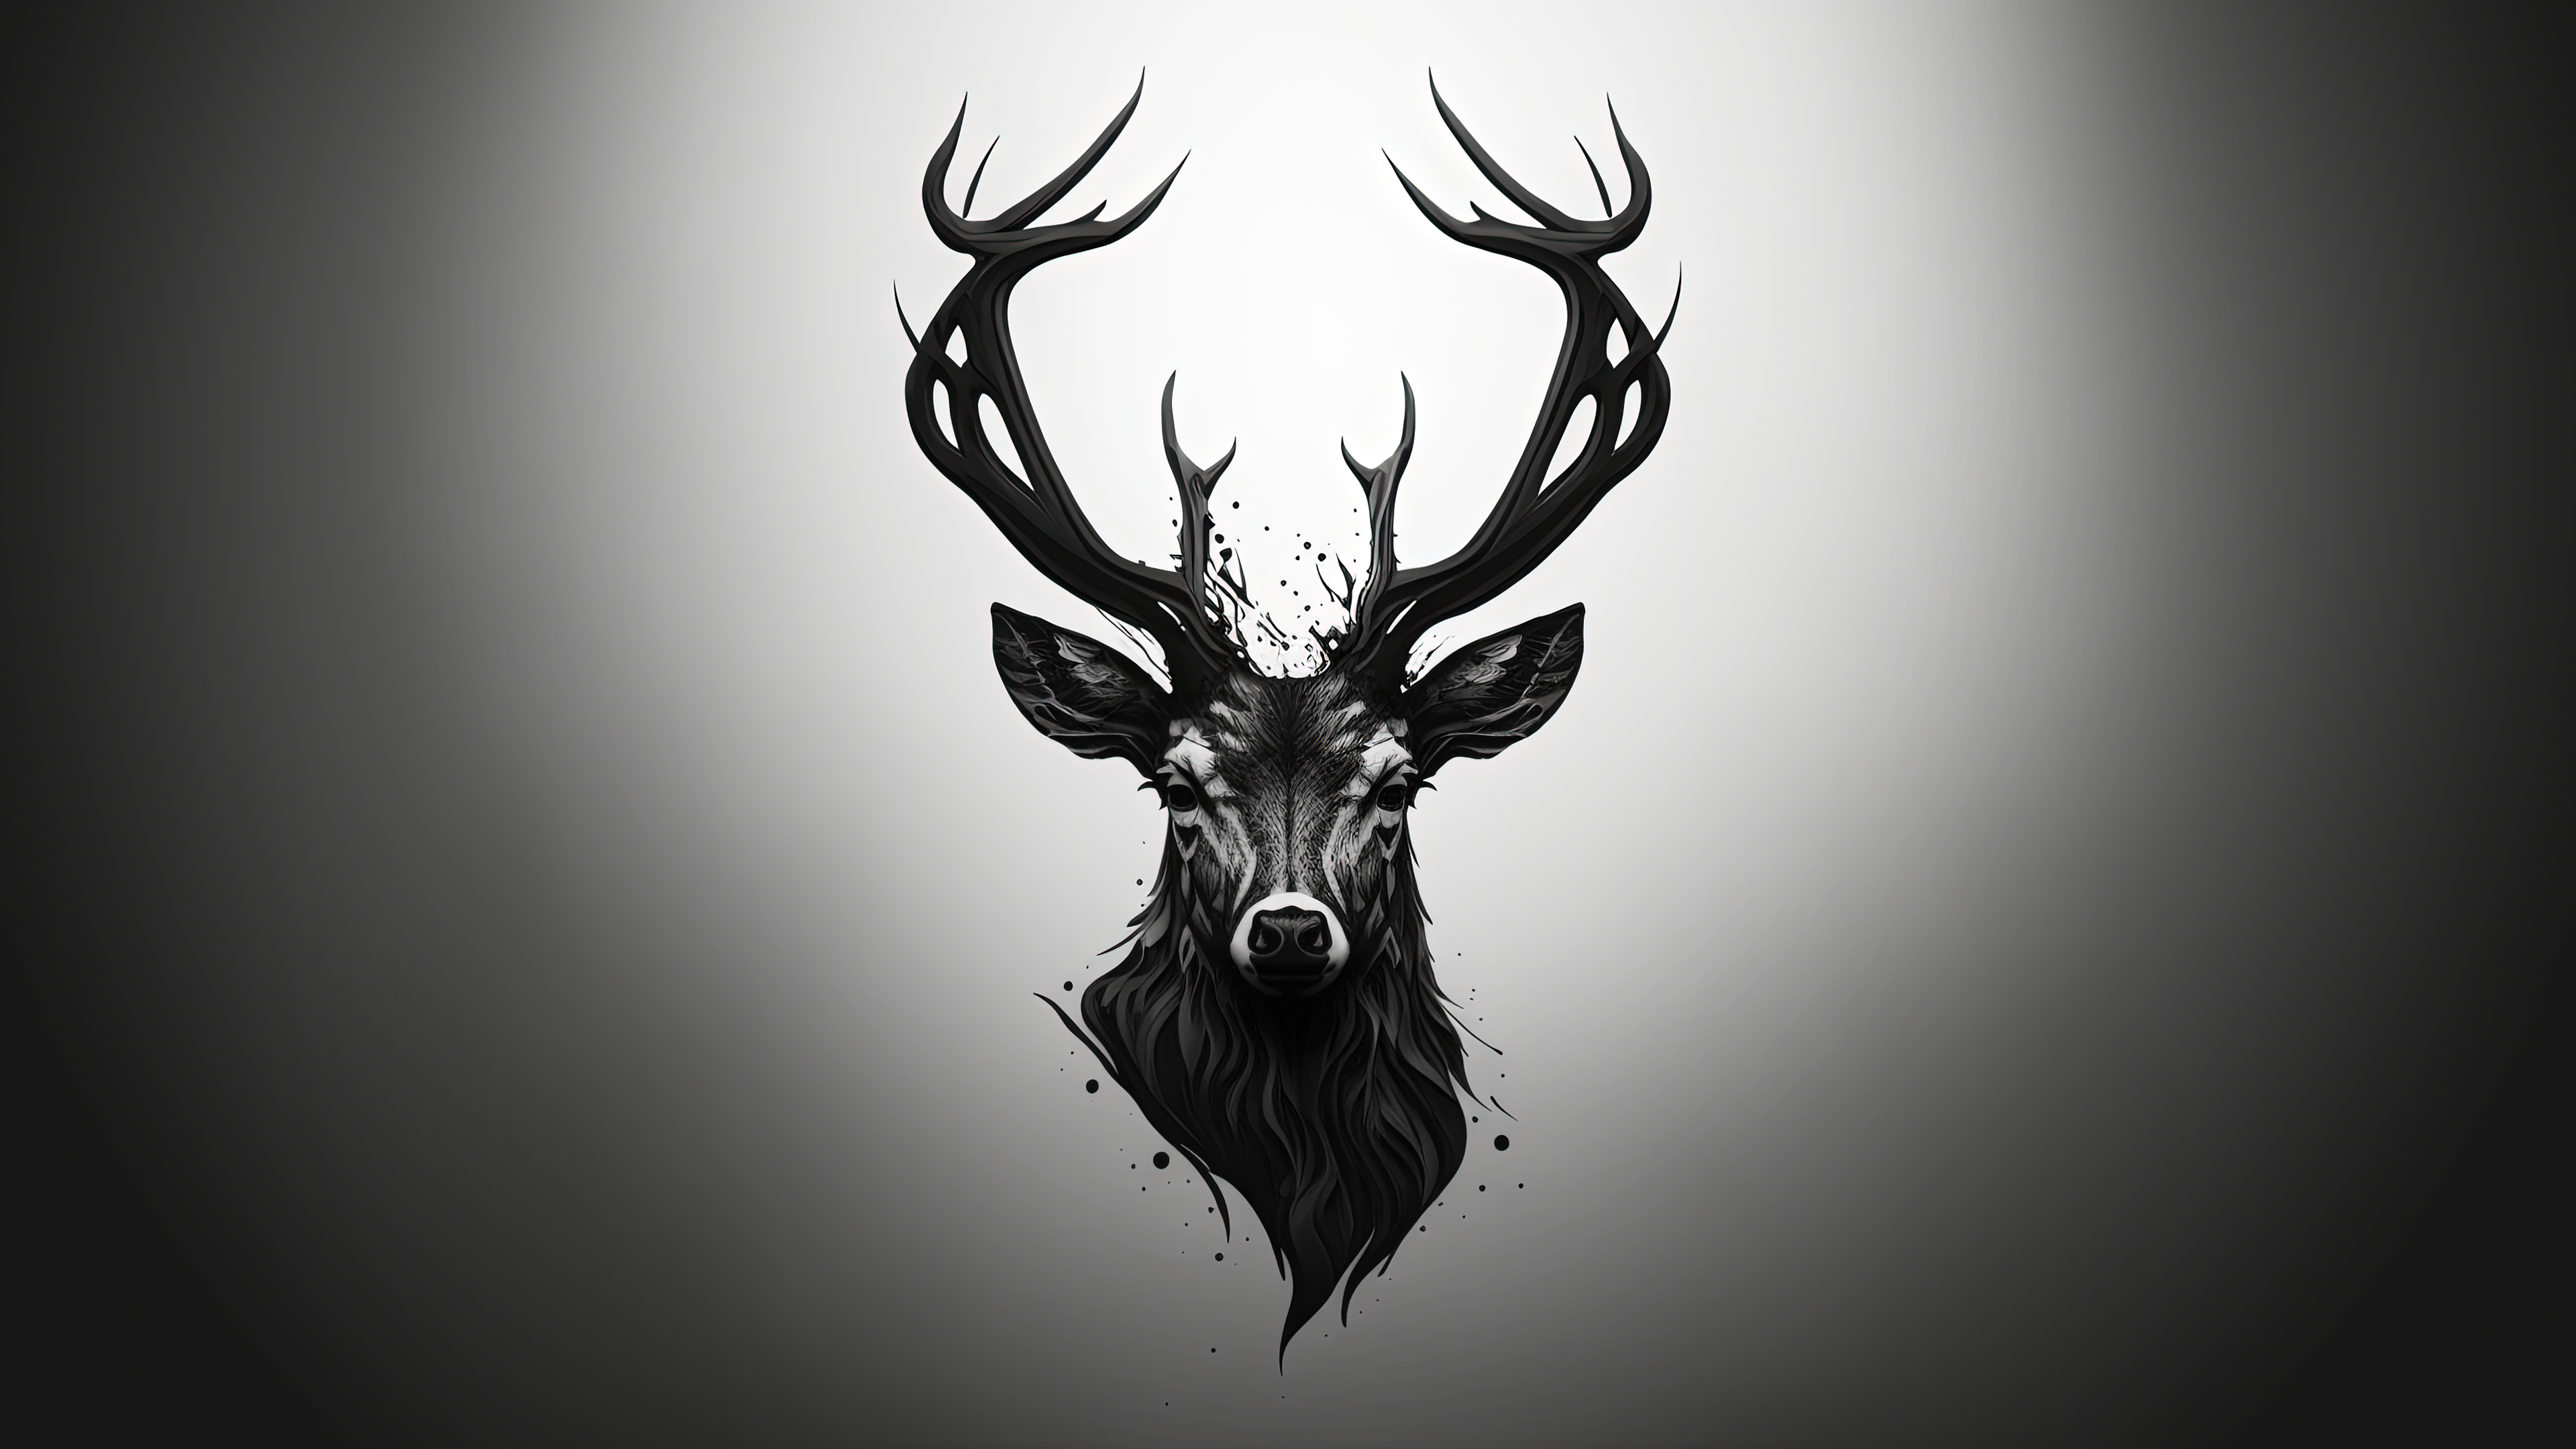 Deer Wallpapers  Top 30 Best Deer Wallpapers  HQ 